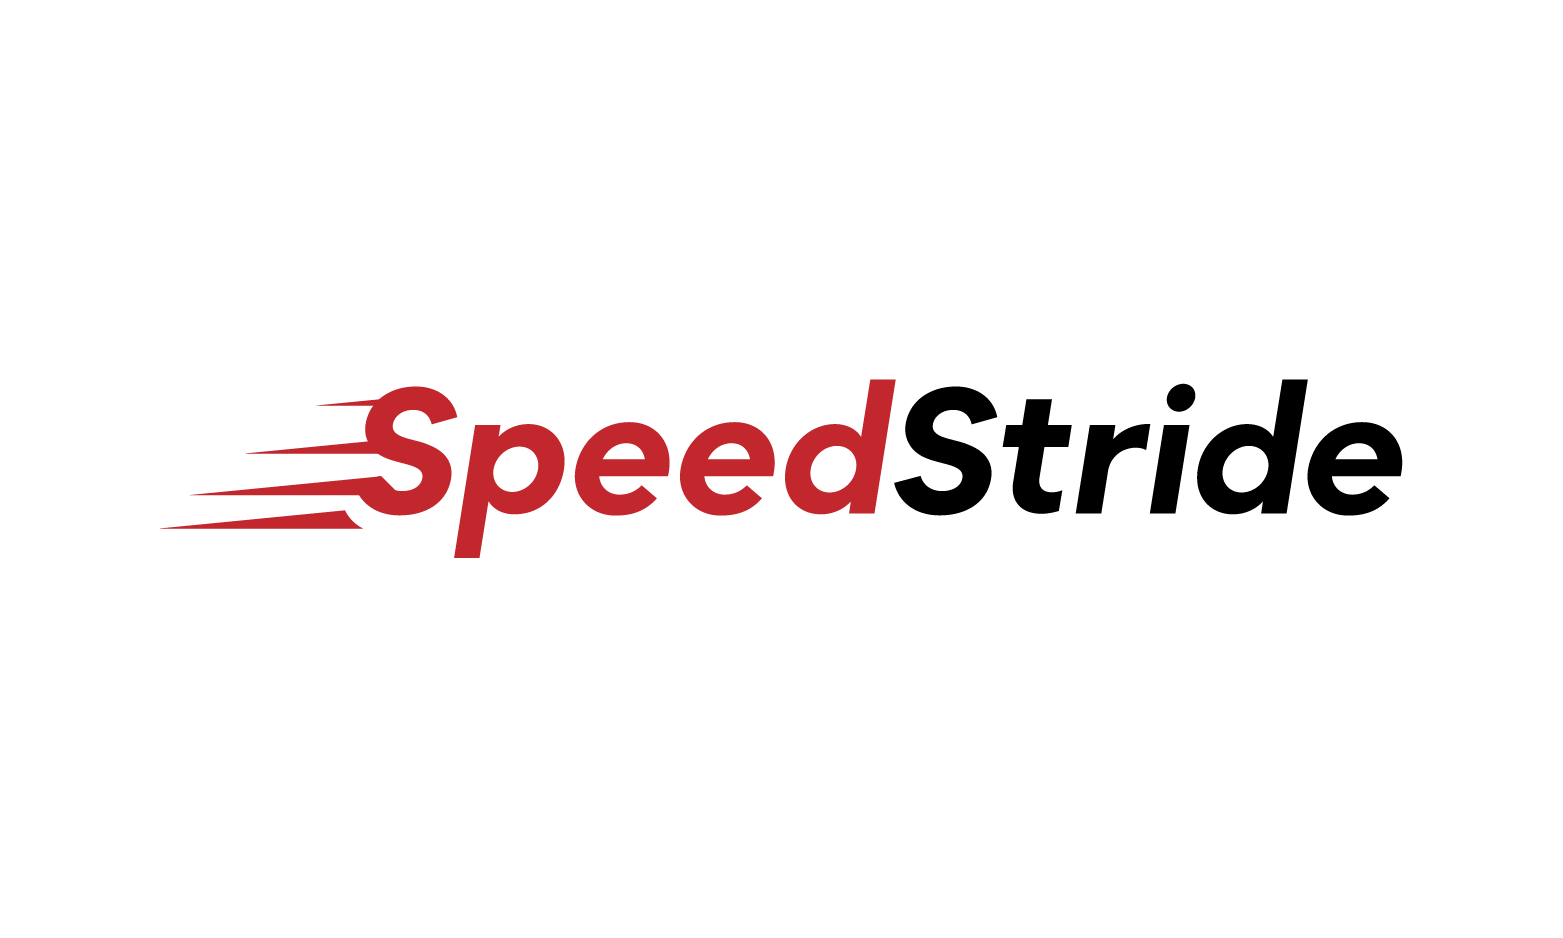 SpeedStride.com - Creative brandable domain for sale